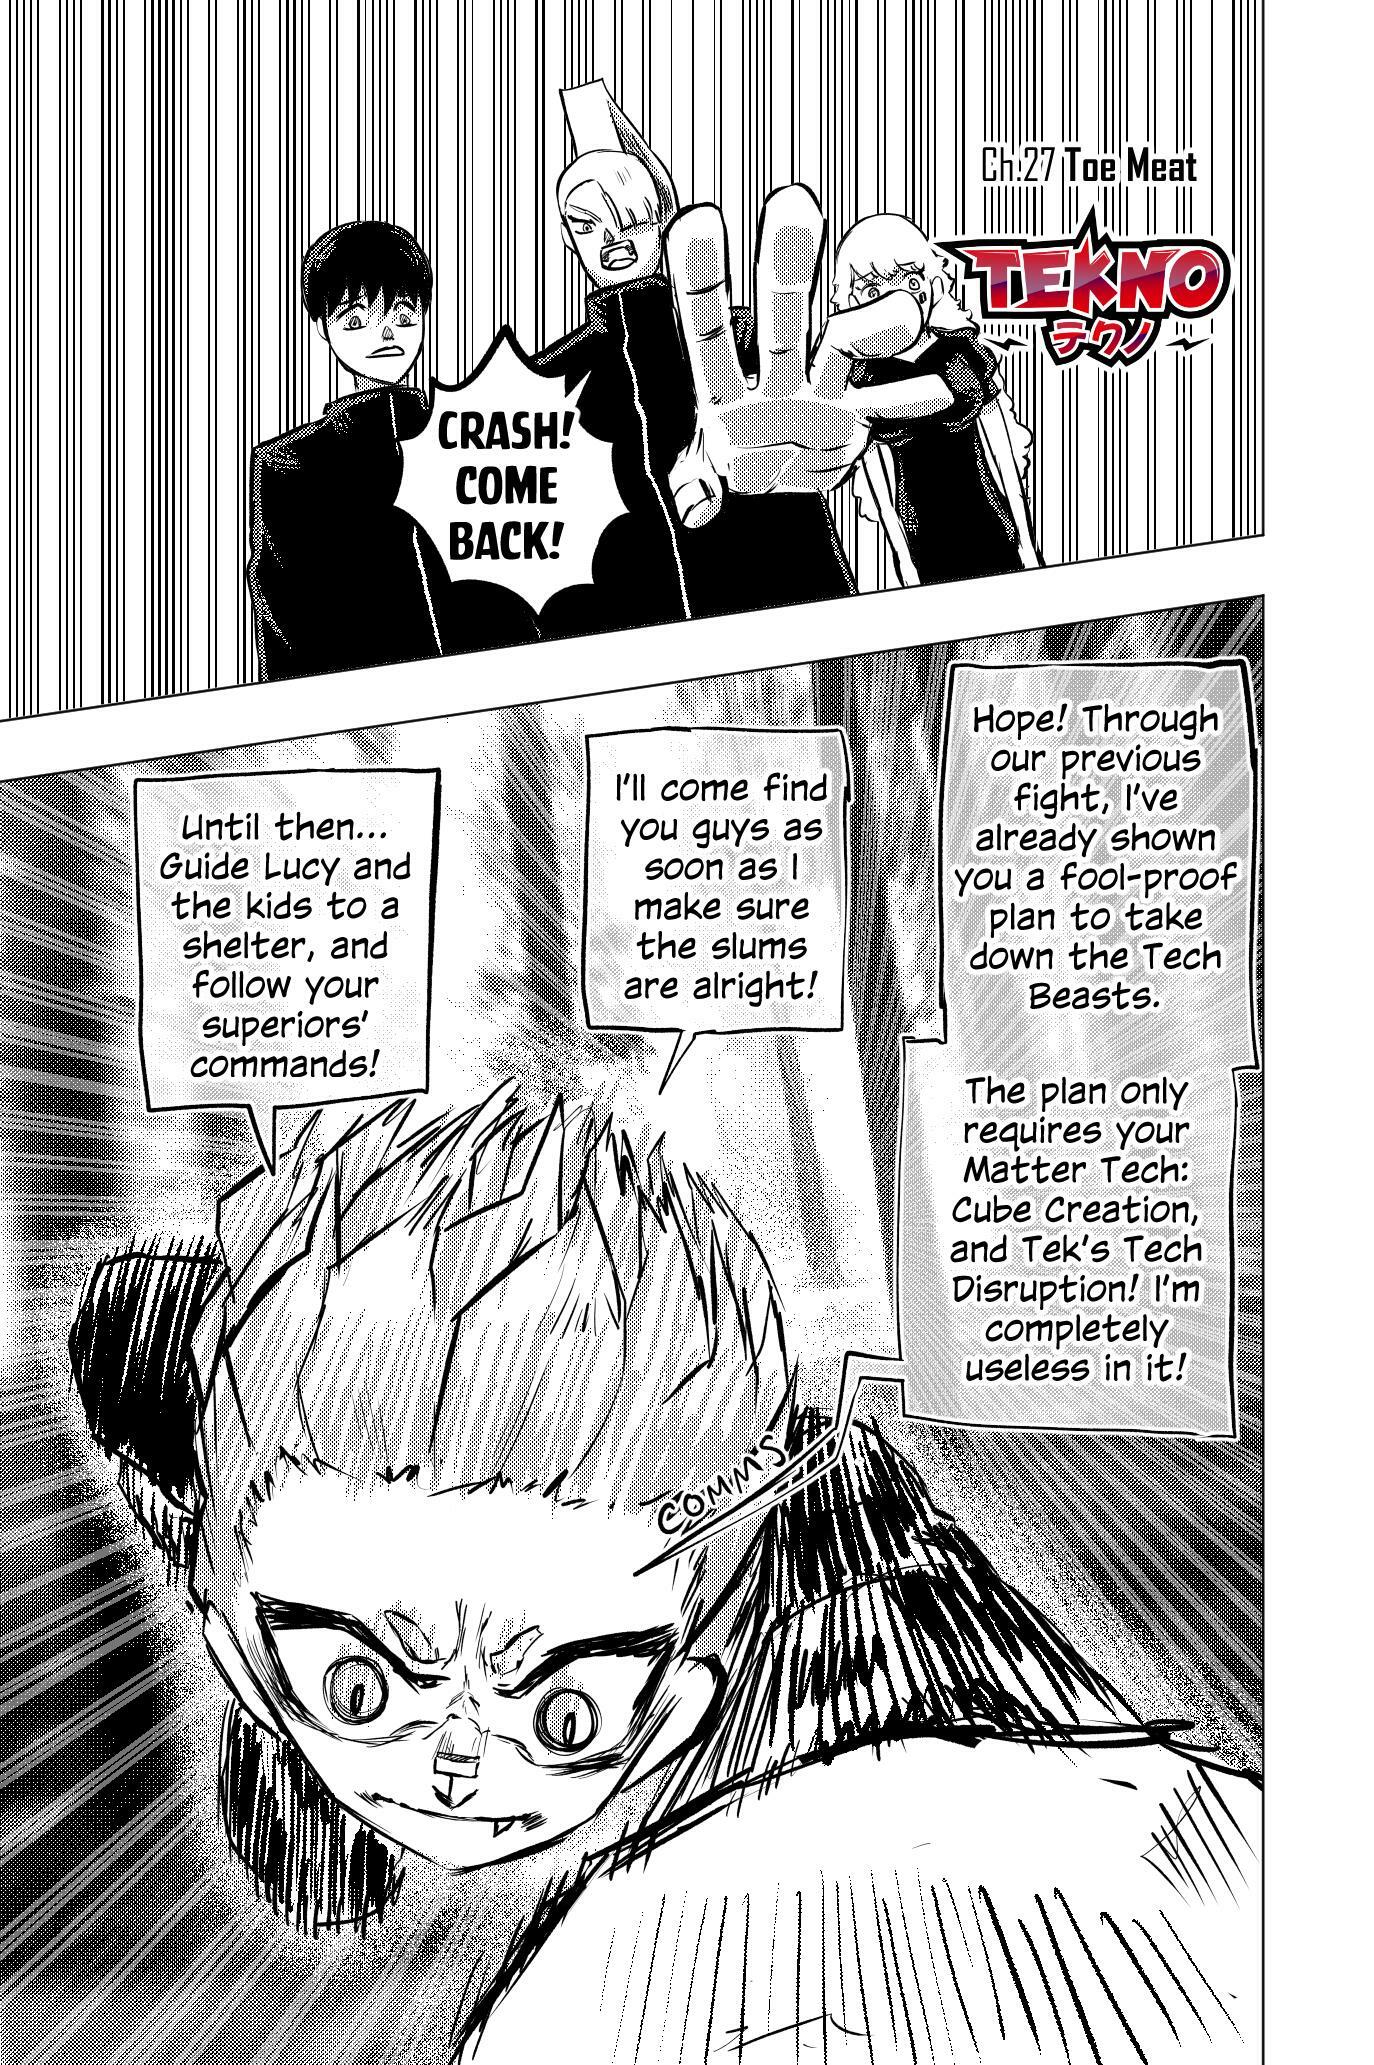 One Punch-Man Chapter 27 - One Punch Man Manga